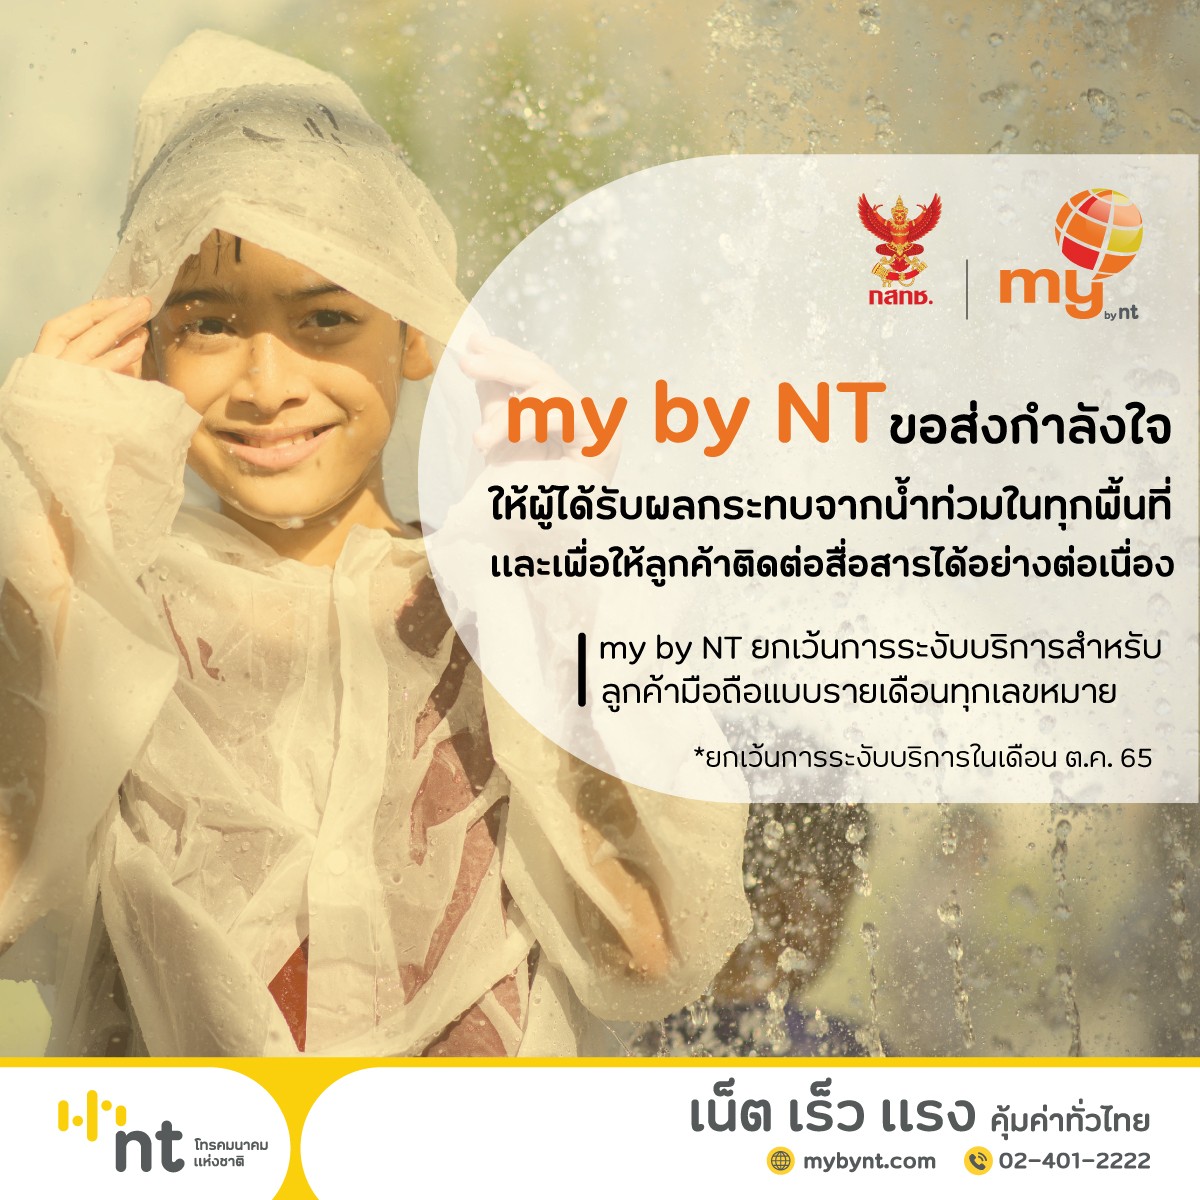 NT ขอส่งกำลังใจให้ผู้ได้รับผลกระทบจากน้ำท่วมในทุกพื้นที่ และเพื่อให้ลูกค้าติดต่อสื่อสารได้อย่างต่อเนื่อง